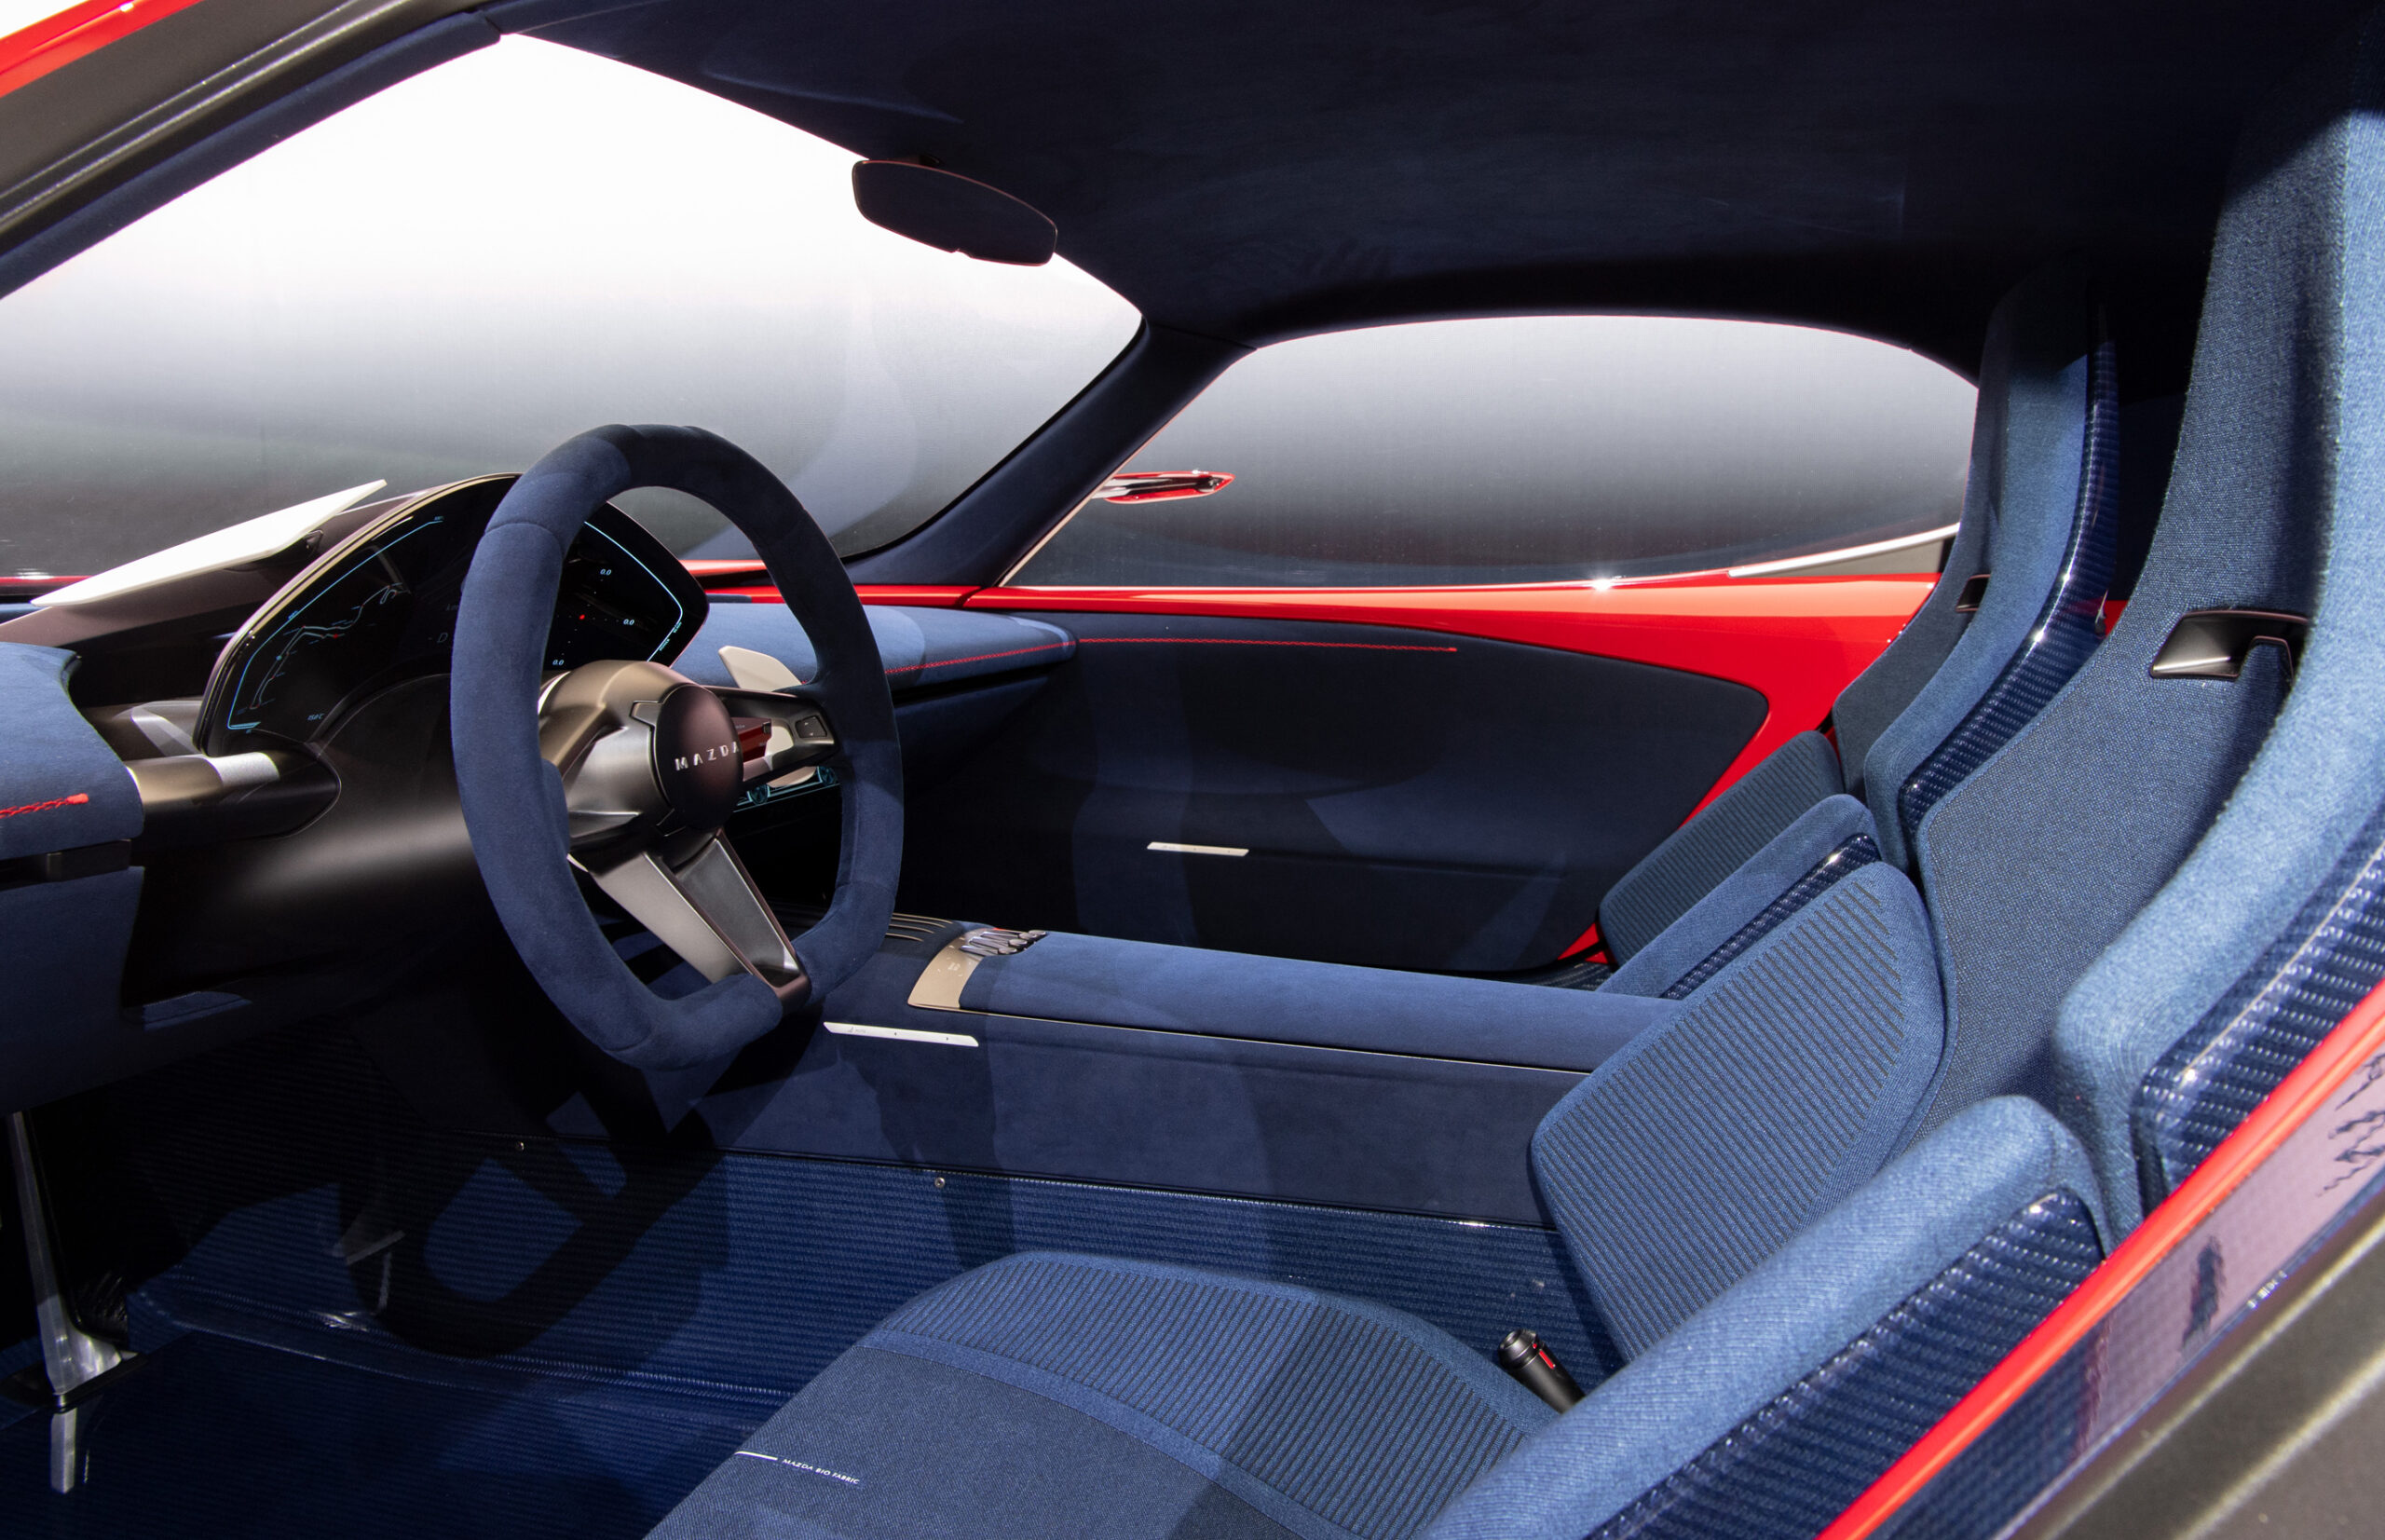 MAZDA NEWSROOM｜Mazda unveils 'MAZDA ICONIC SP' compact sports car